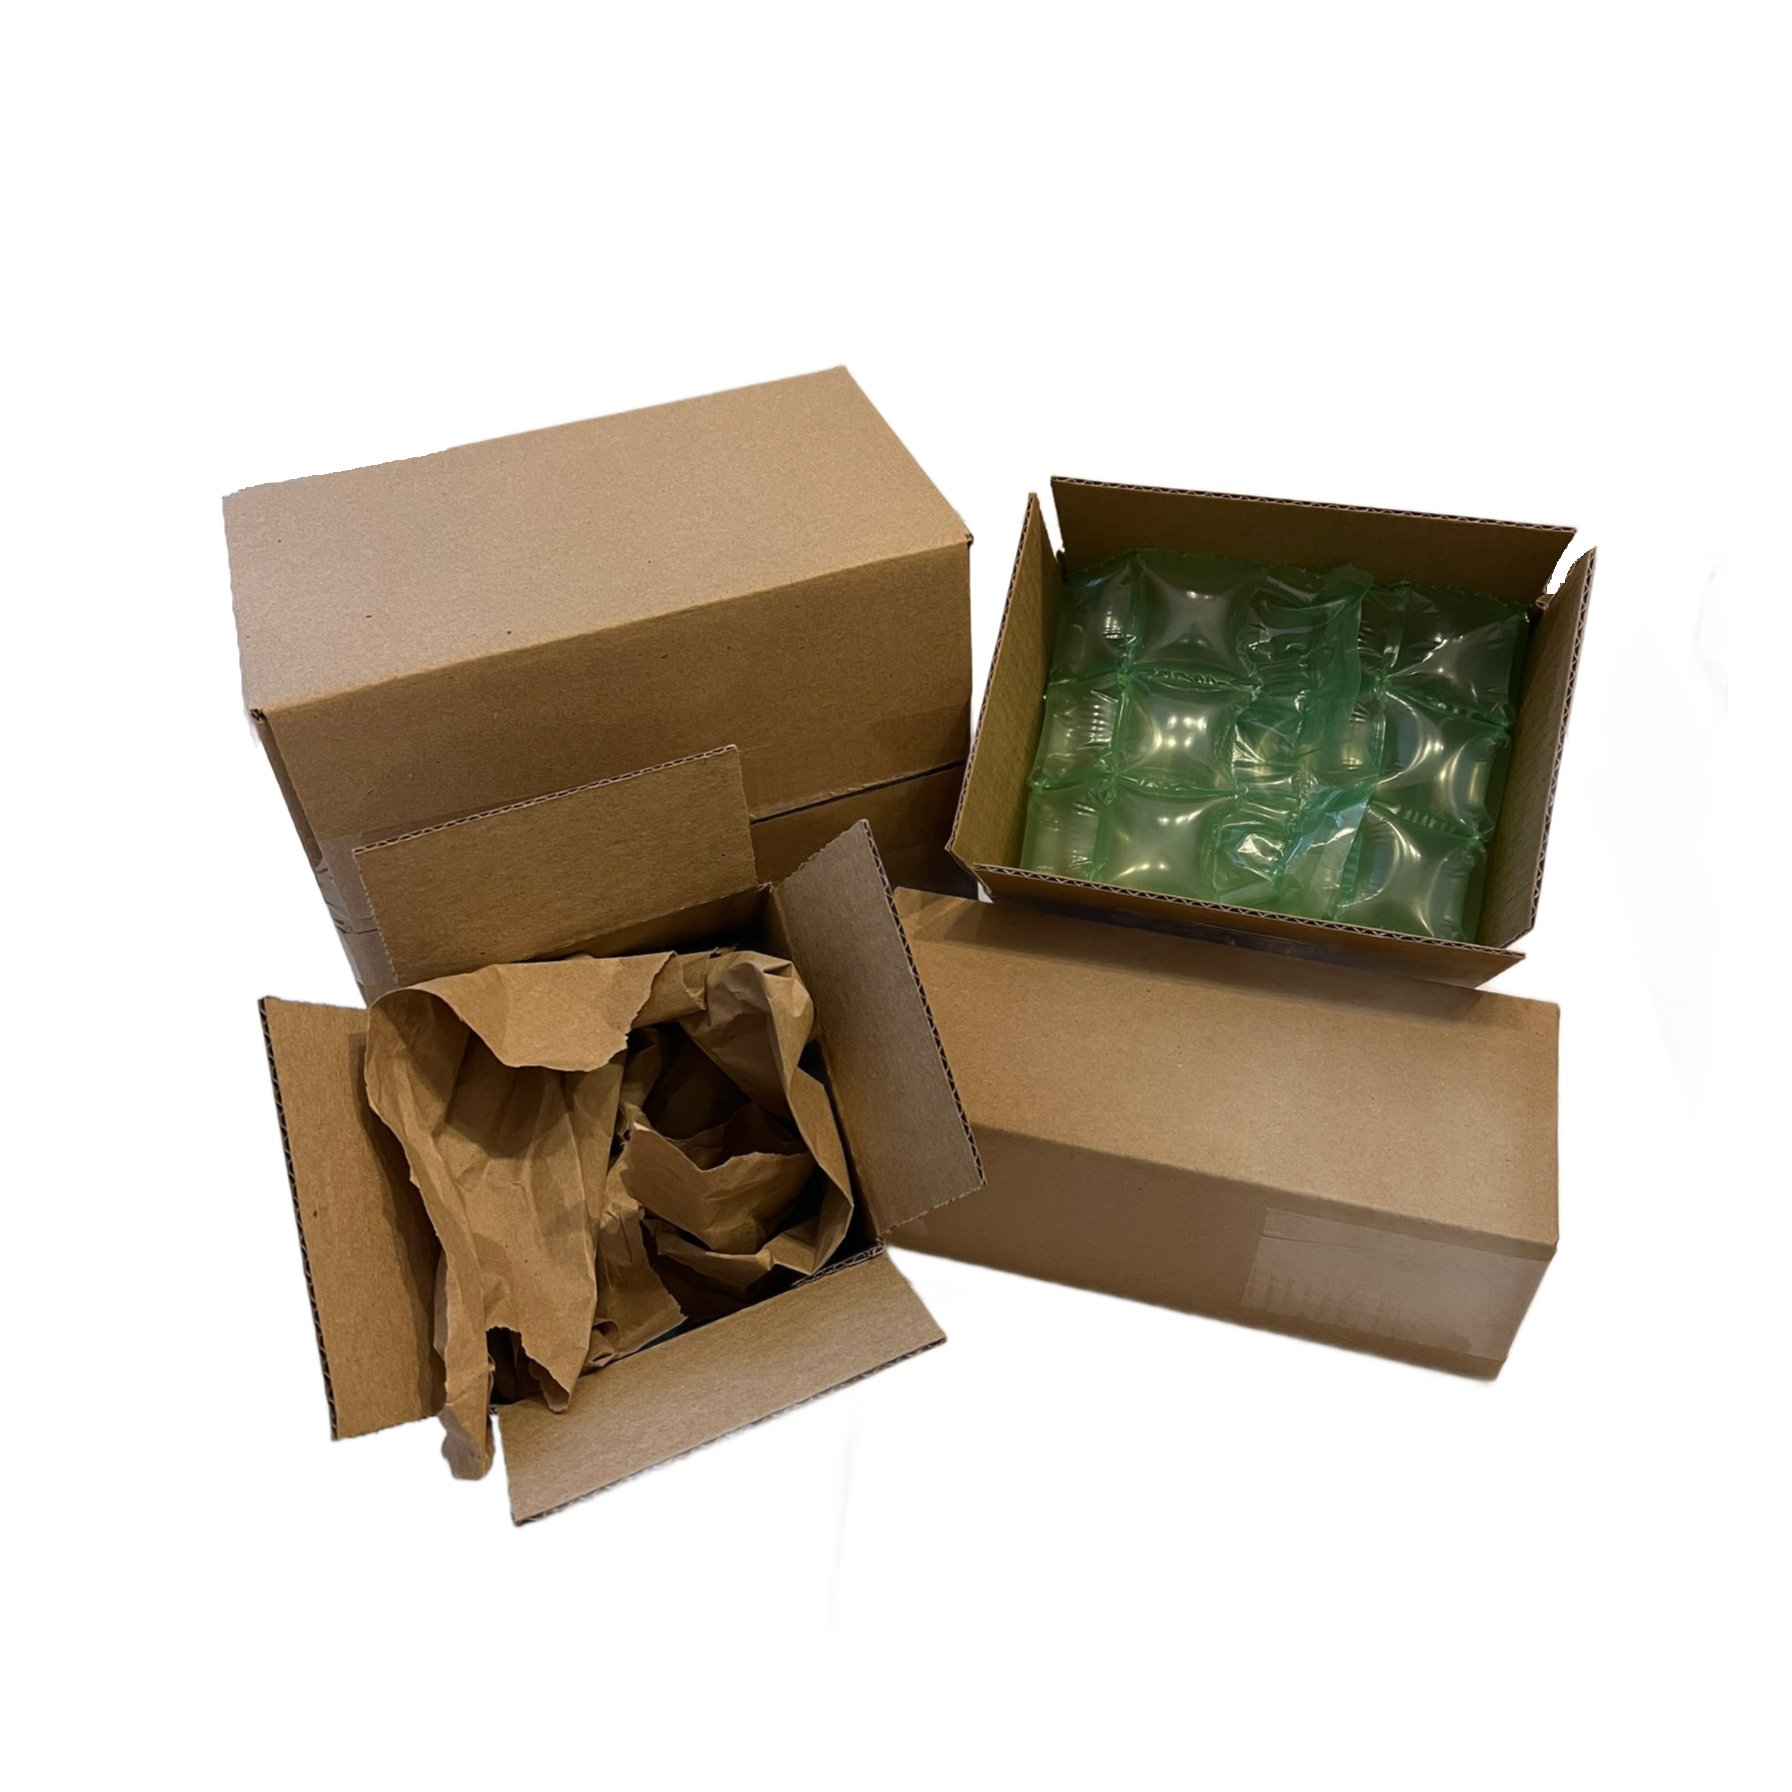 100 Boxes 50 each 4x4x4, 6x6x6 Shipping Packing Mailing Box Corrugated Carton